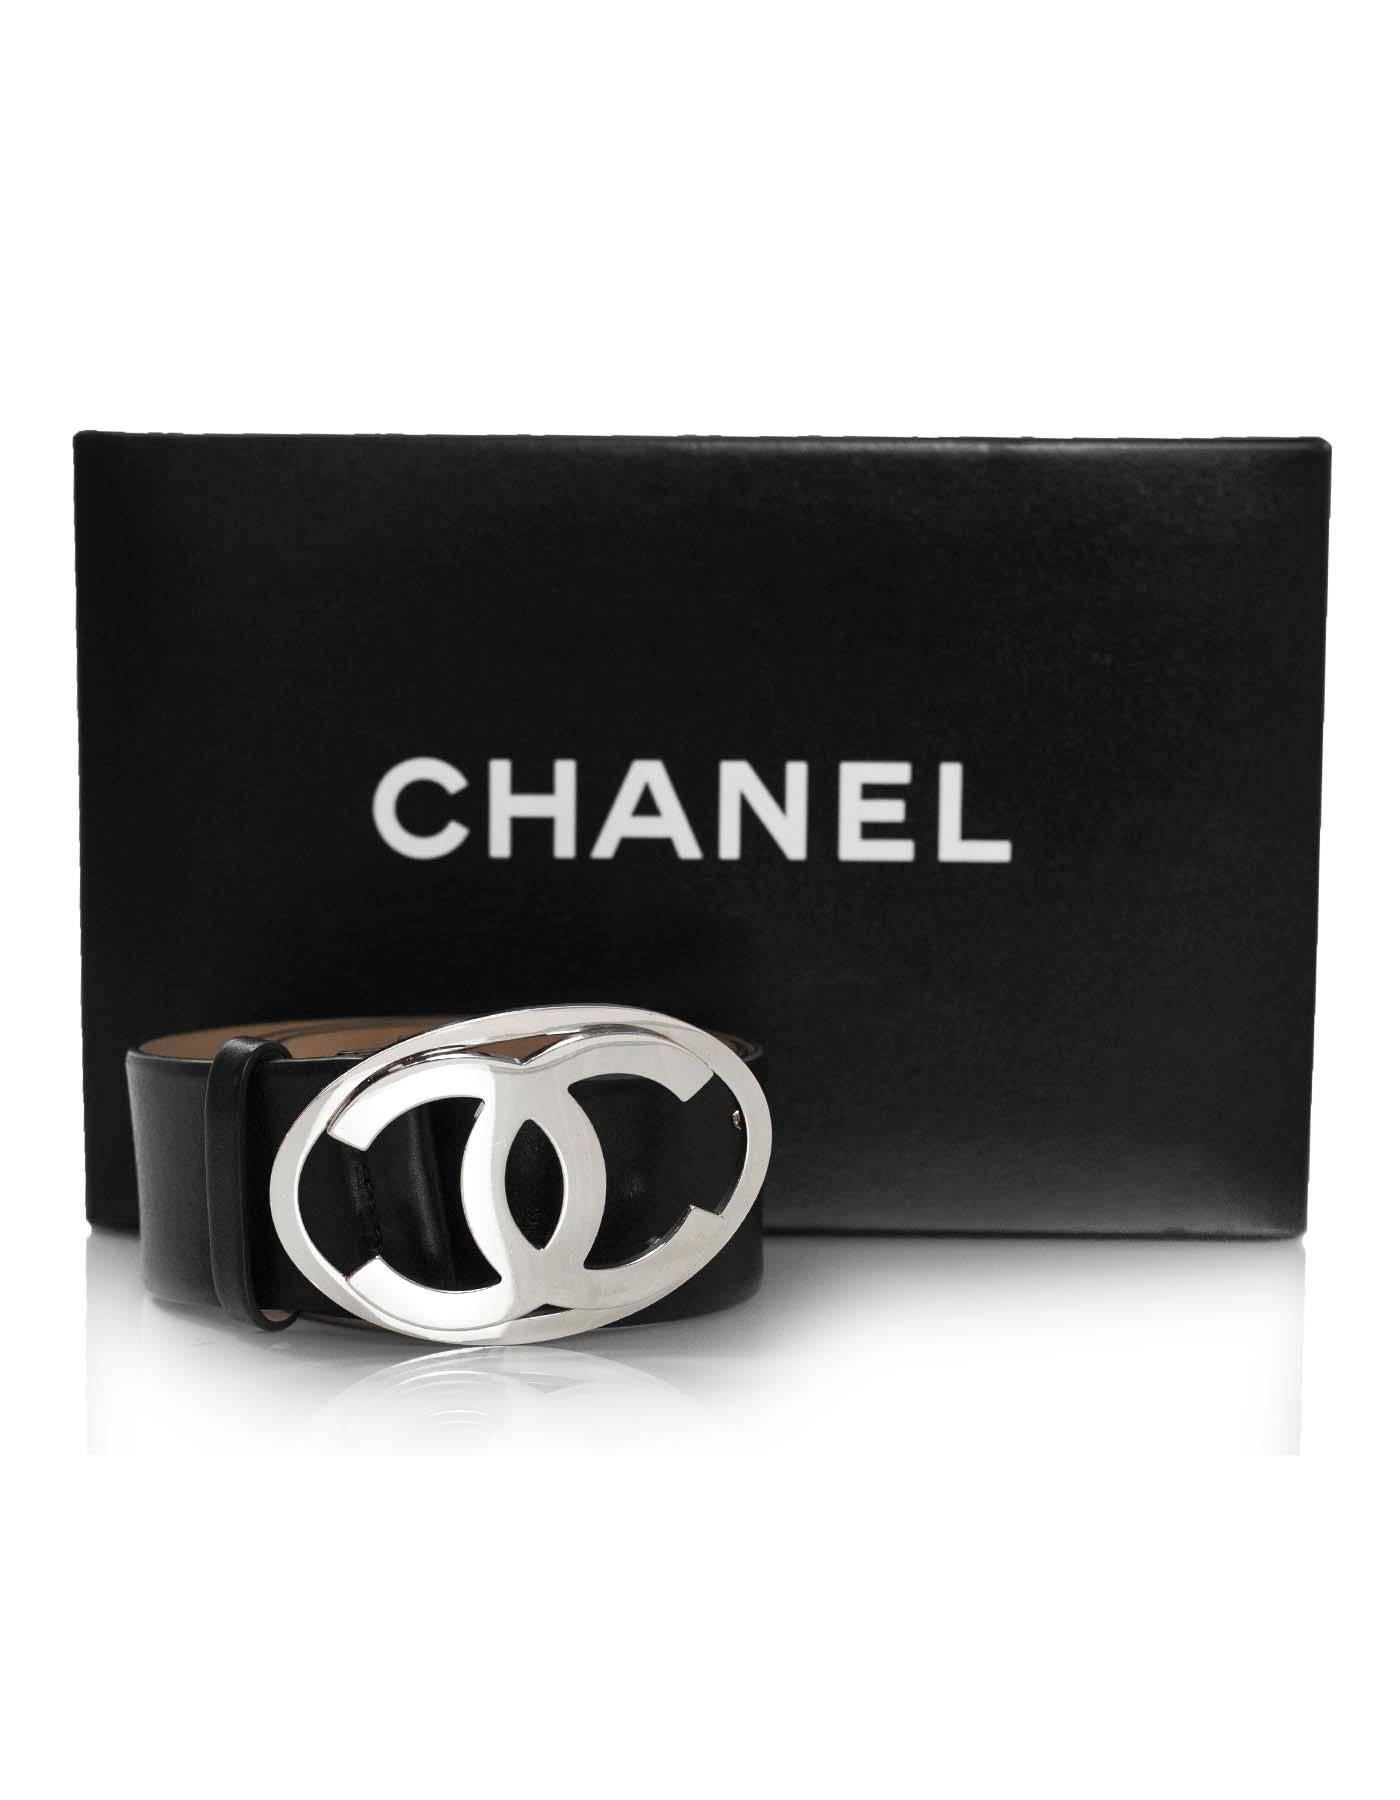 Chanel Black Leather CC Logo Belt Sz 80 2